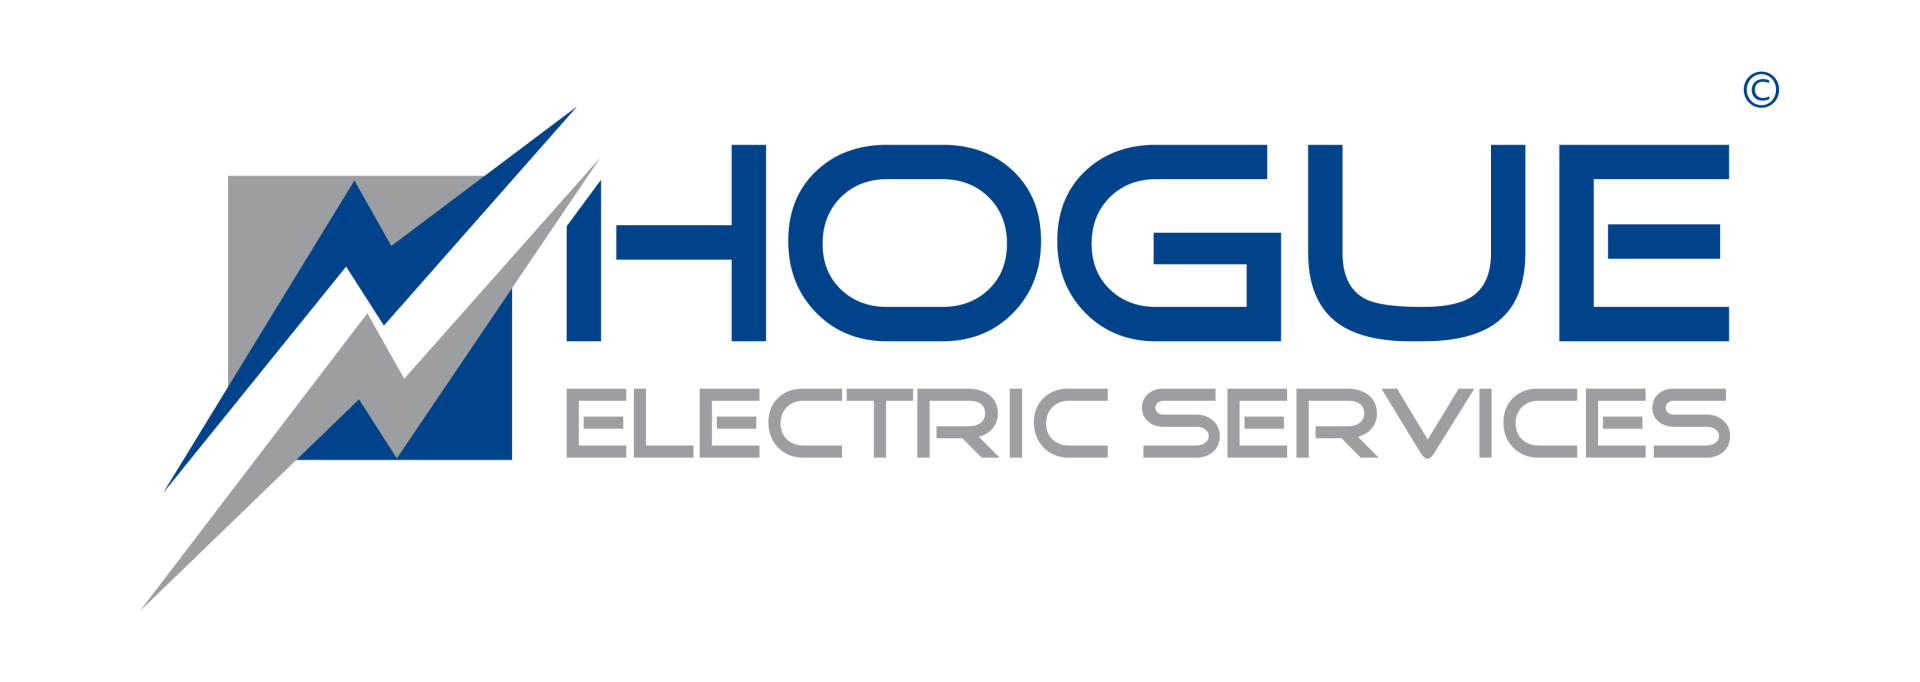 Hogue Electric Services, Valencia, PA